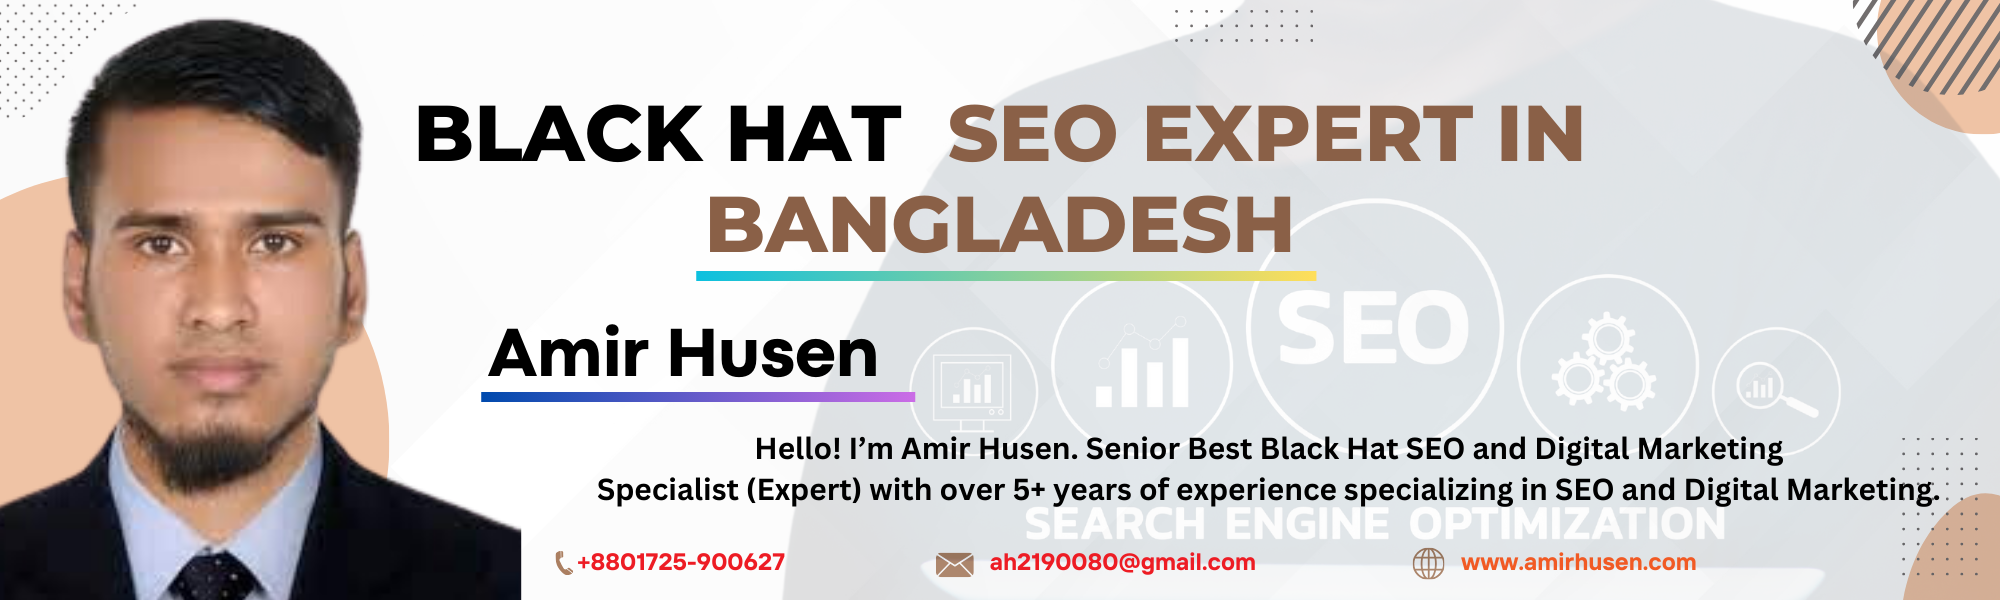 black hat SEO expert in Bangladesh Amir Husen